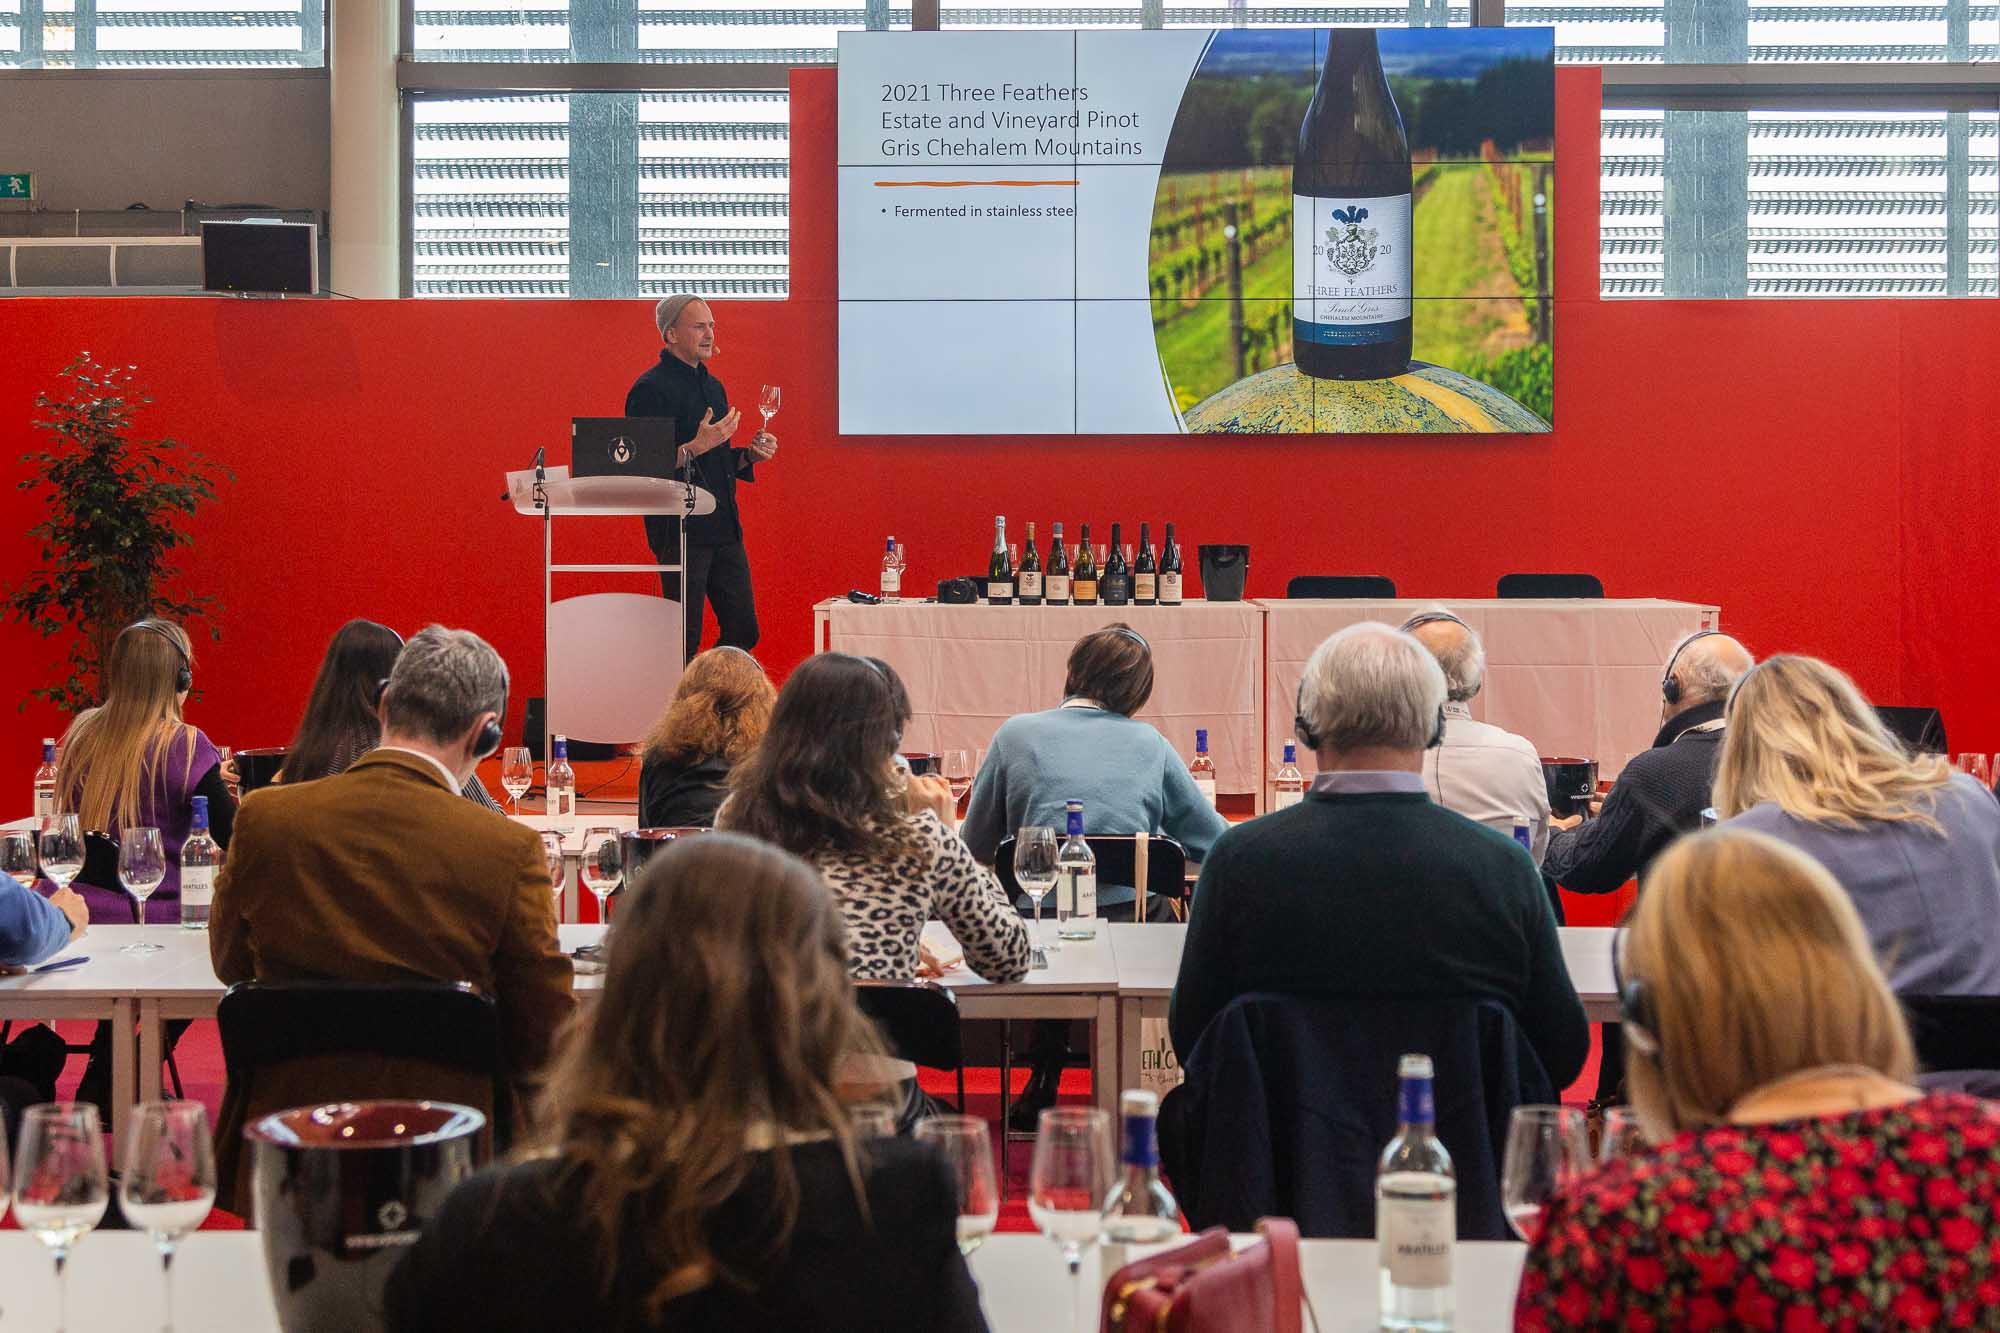 Konstantin Baum, German Master of Wine, presents Three Feathers Chehalem Mountains Pinot Gris 2021